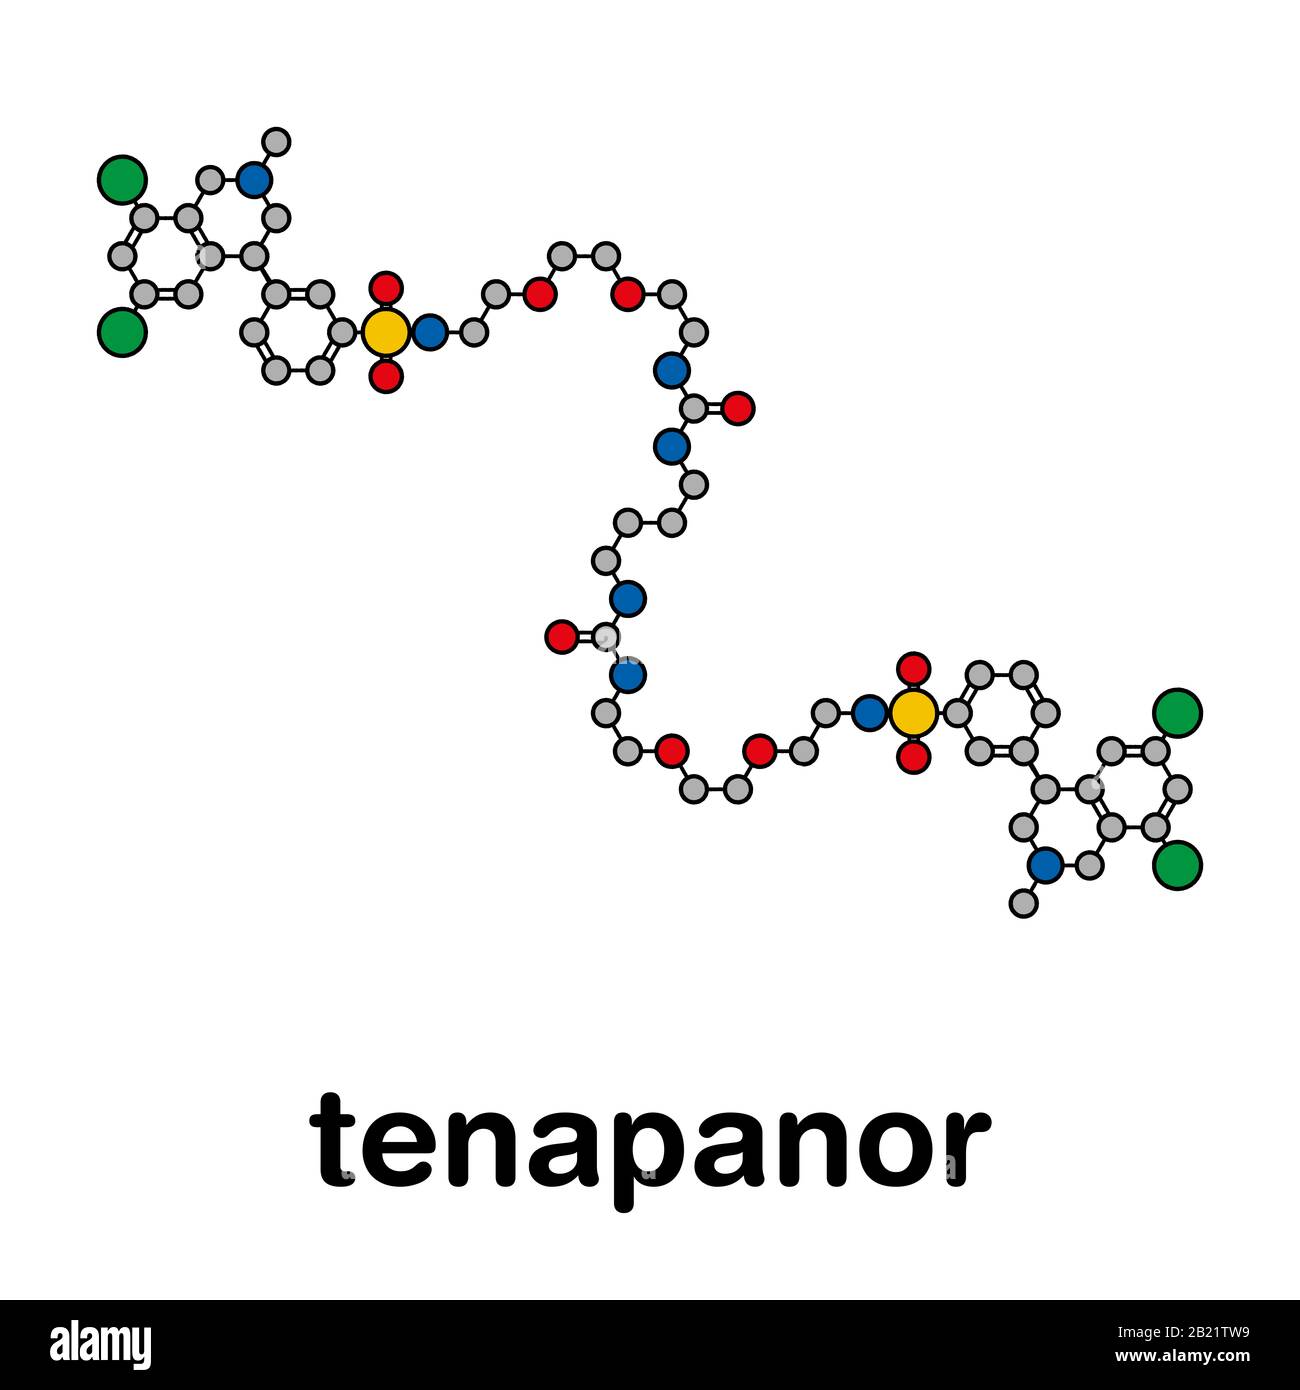 Tenapanor drug molecule, illustration Stock Photo